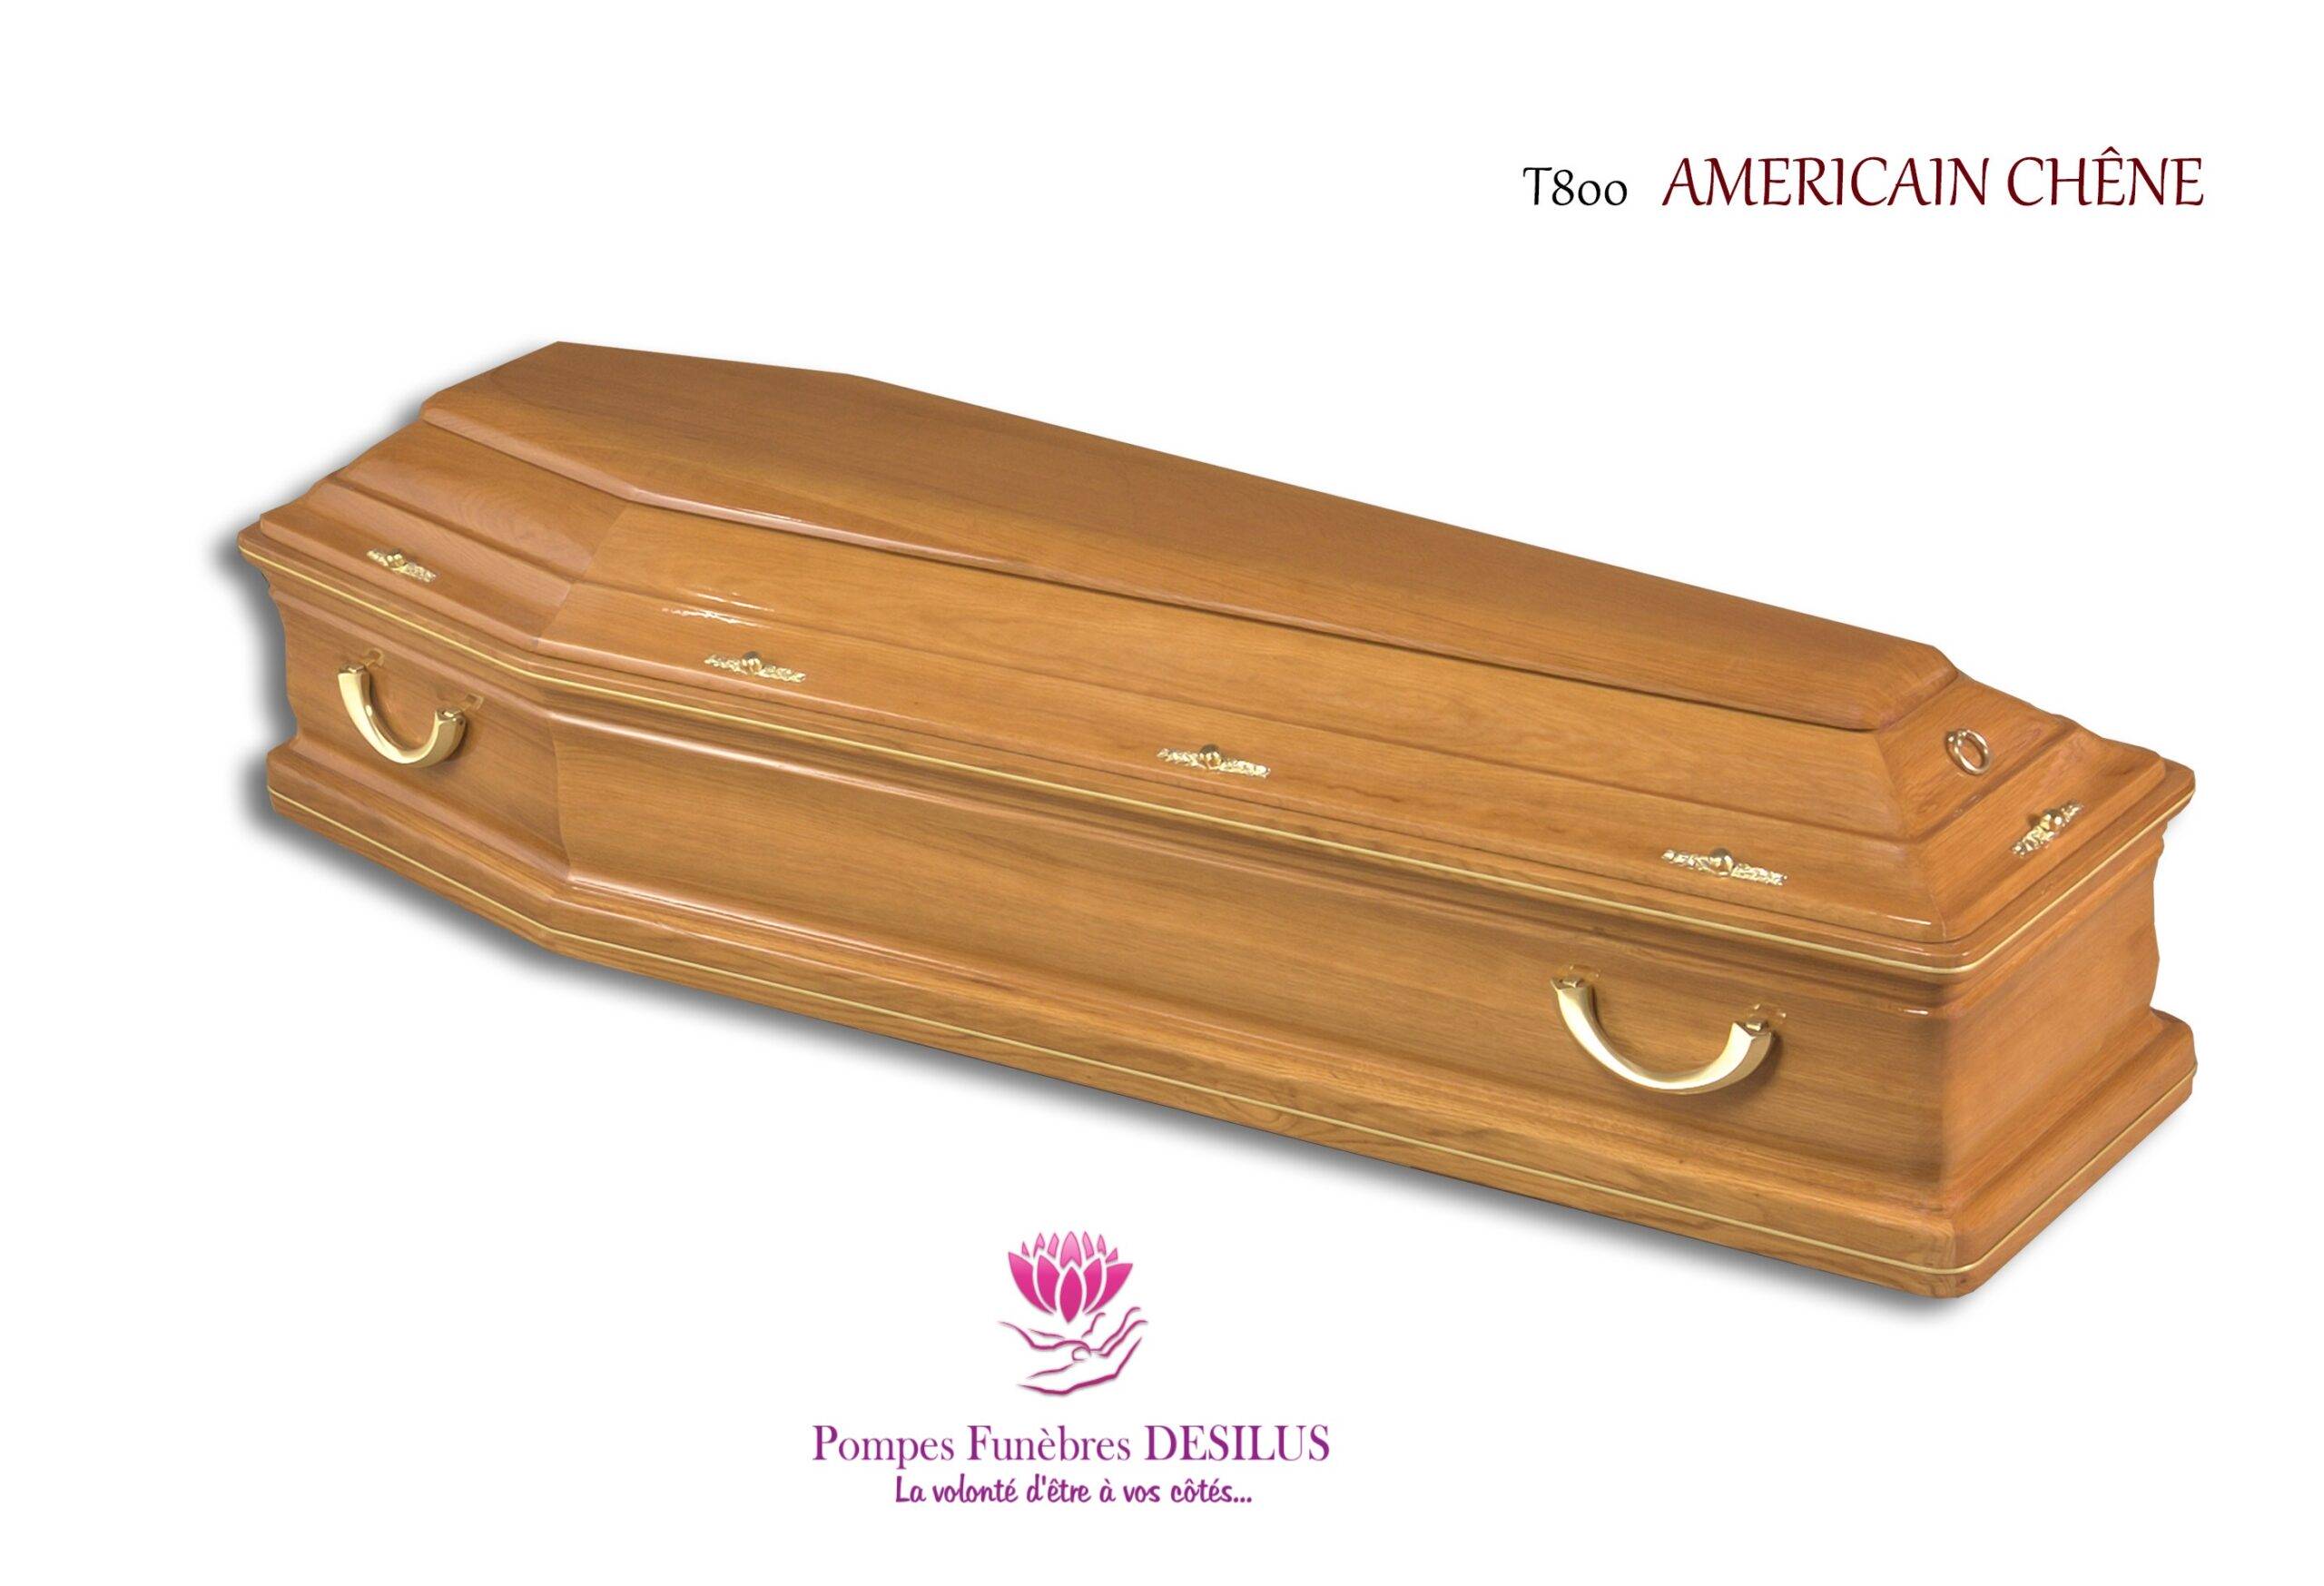 Cercueil Americain Chene